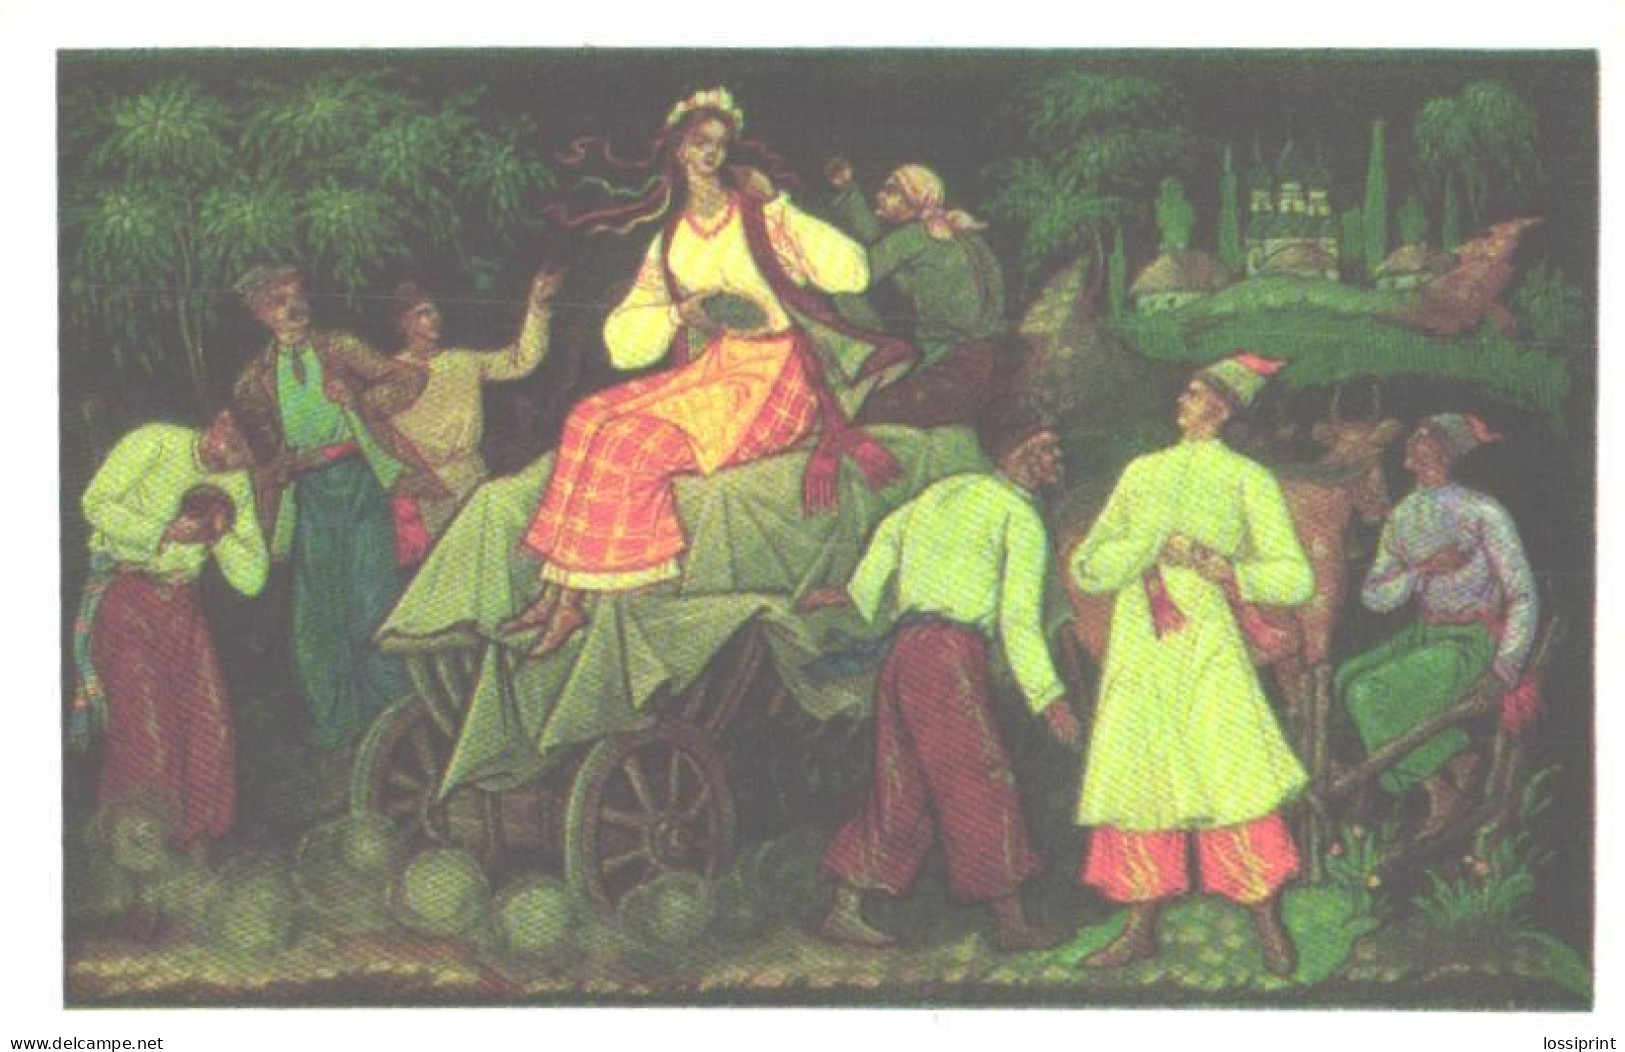 A.Kurkin:Fairy Tale Sorochinskaya Fair, 1976 - Contes, Fables & Légendes